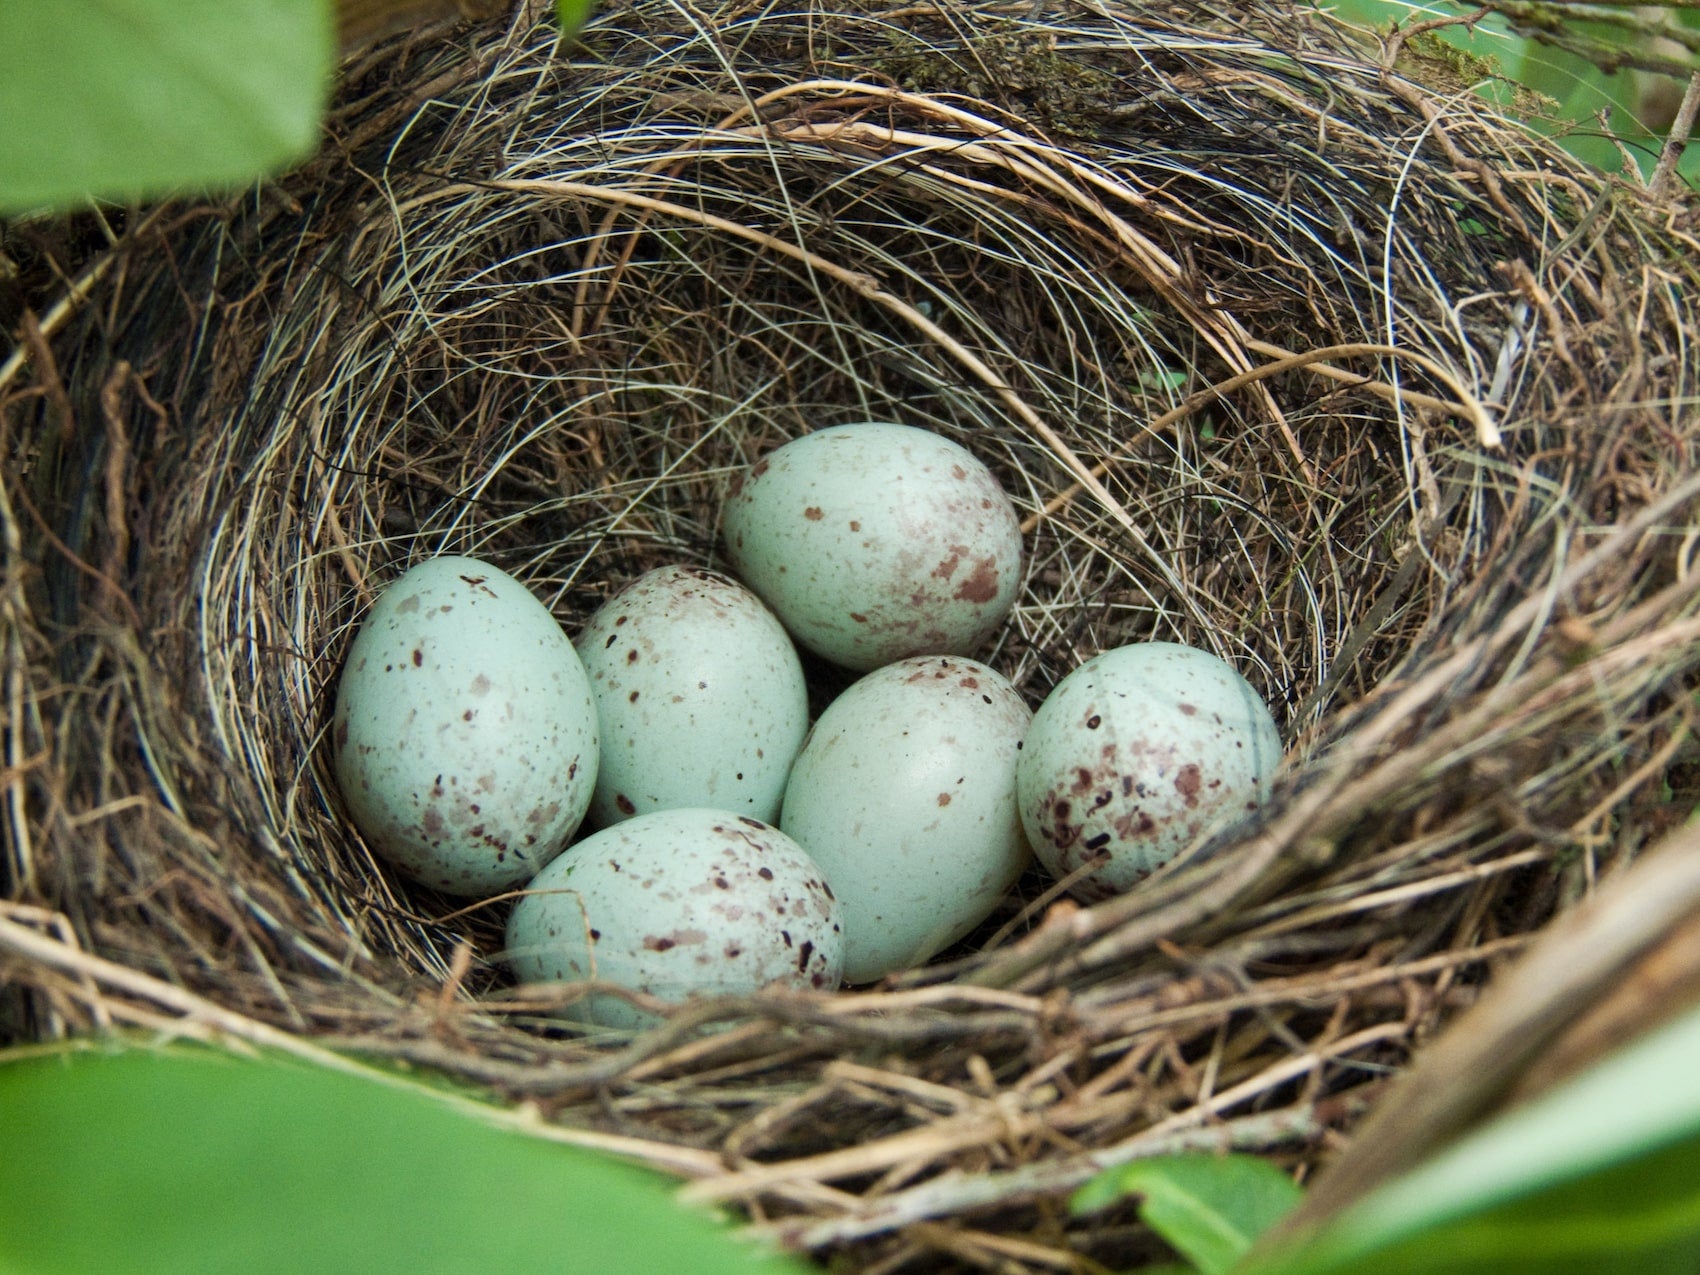 A bullfinch nest with a clutch of eggs.